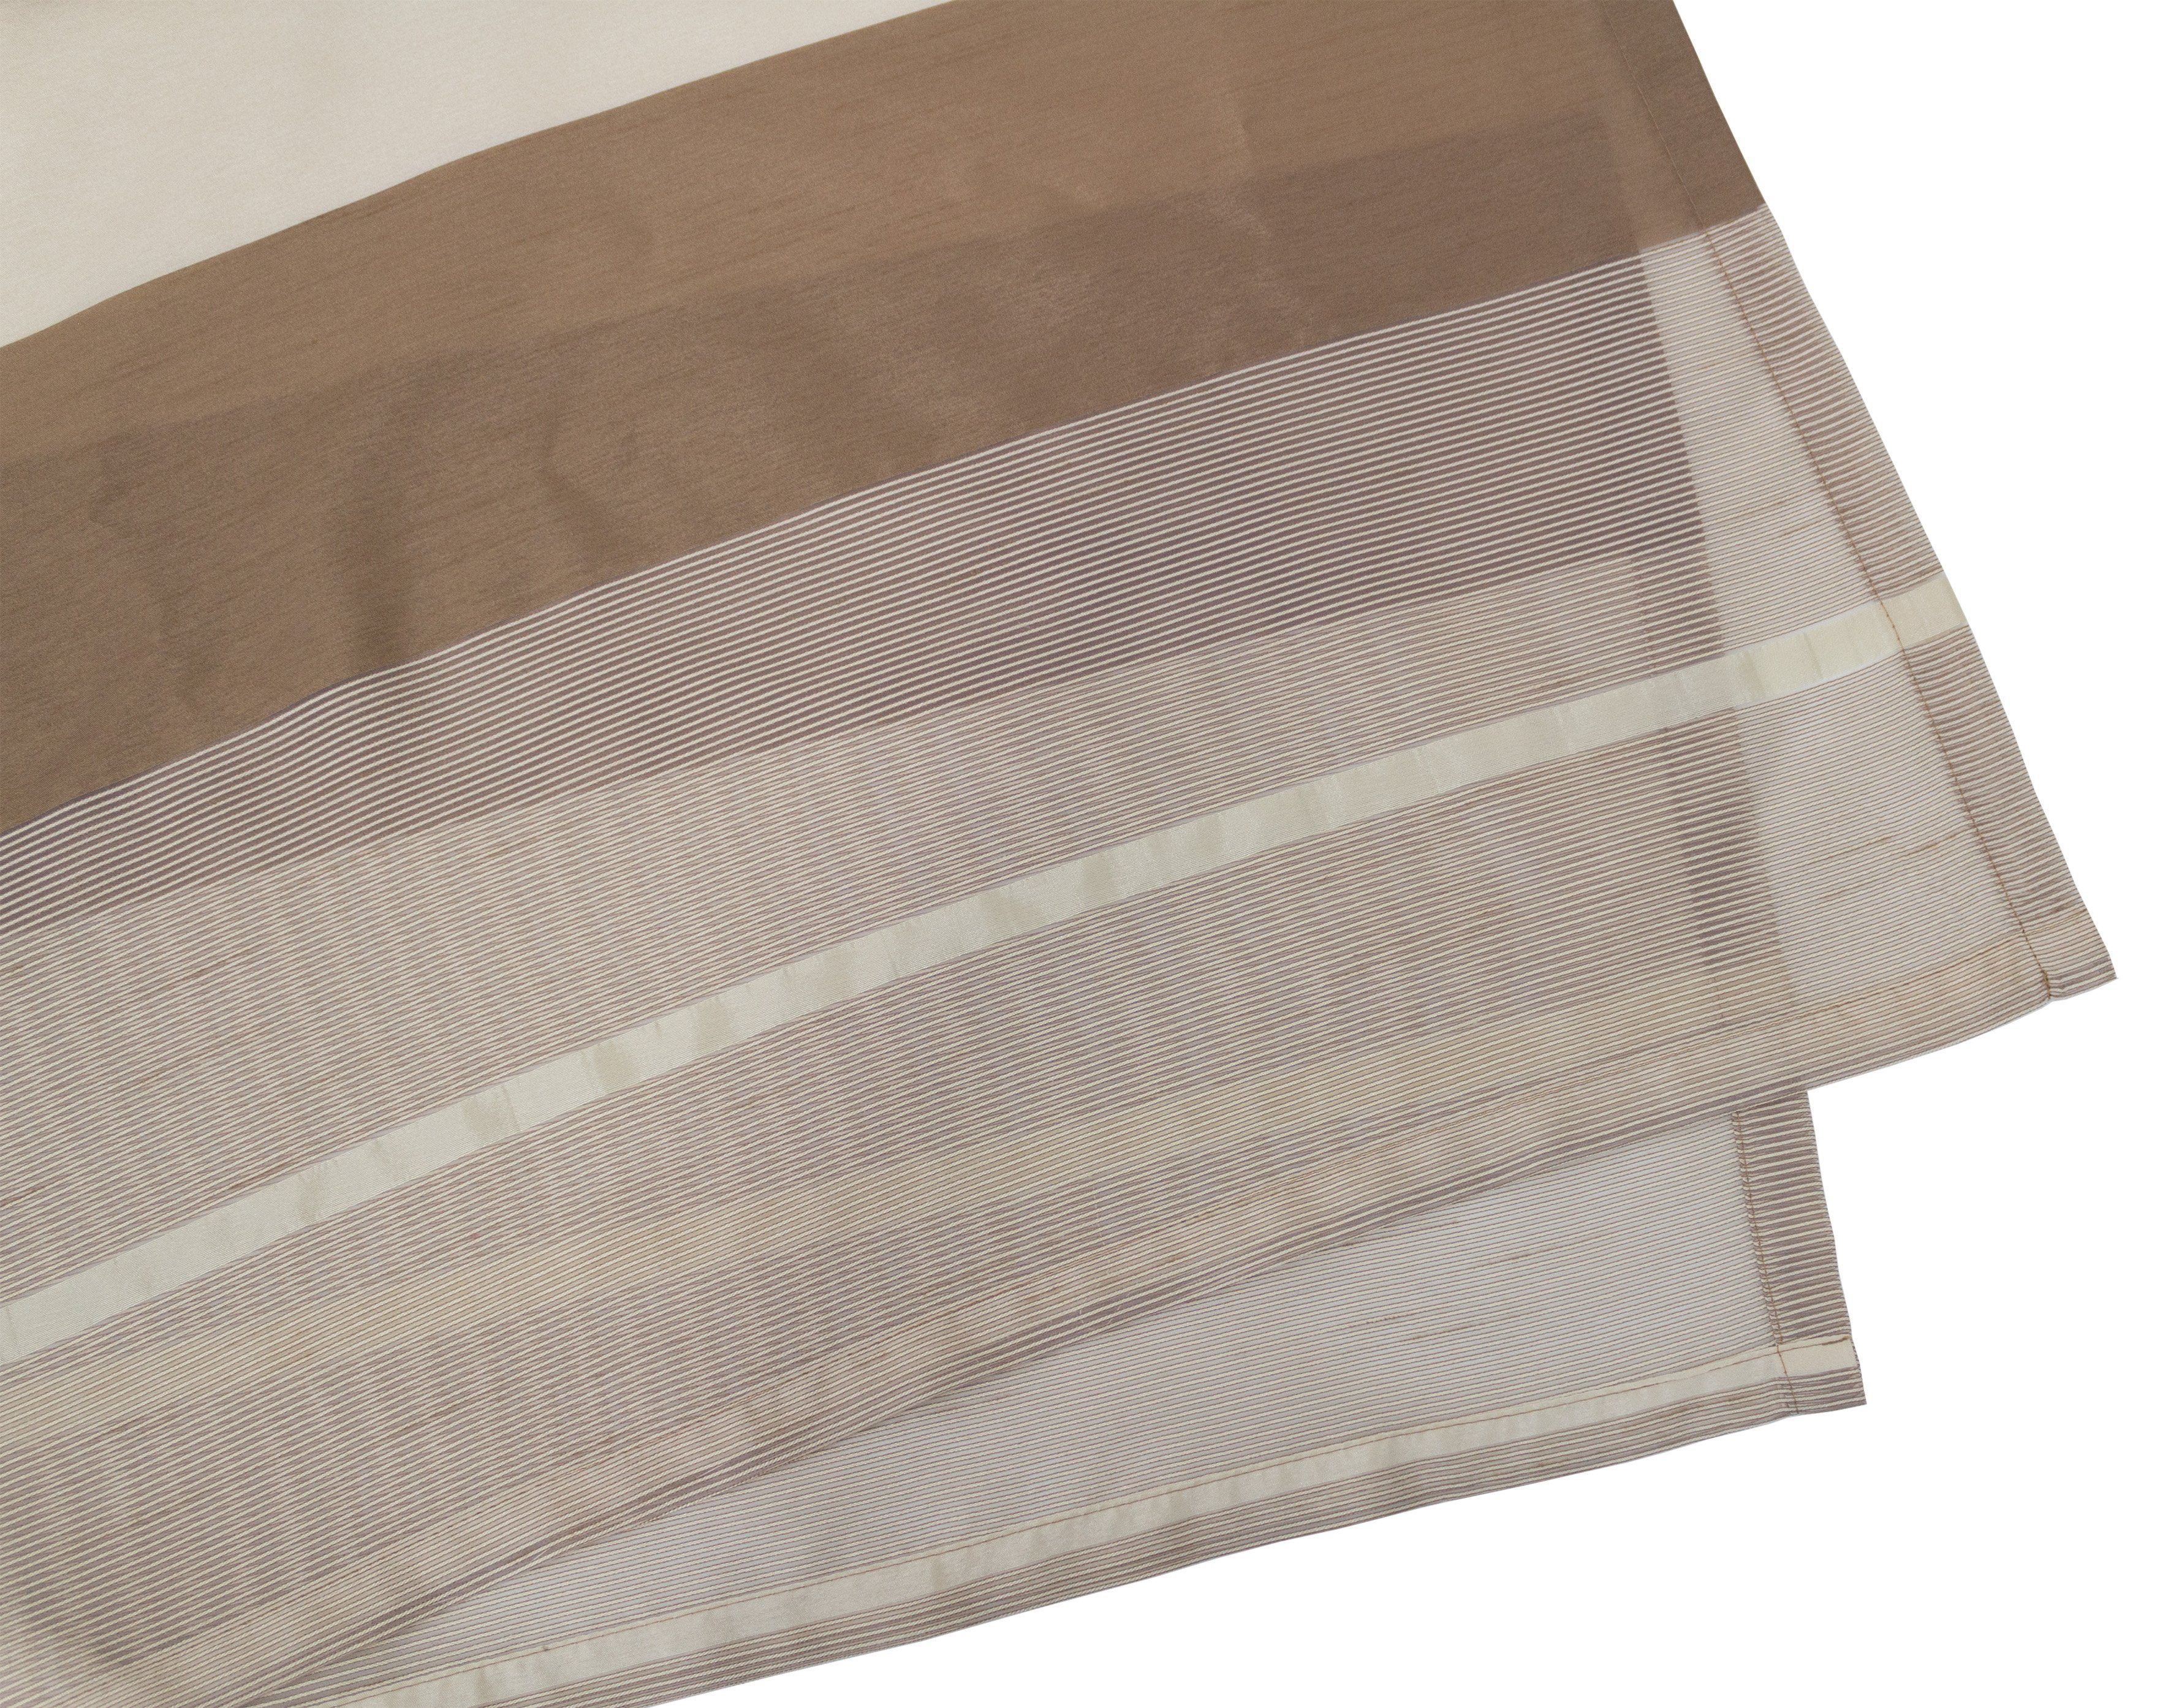 Solea, Polyester, (1 Vorhang beige-braun Schal St), Kräuselband halbtransparent, VHG,